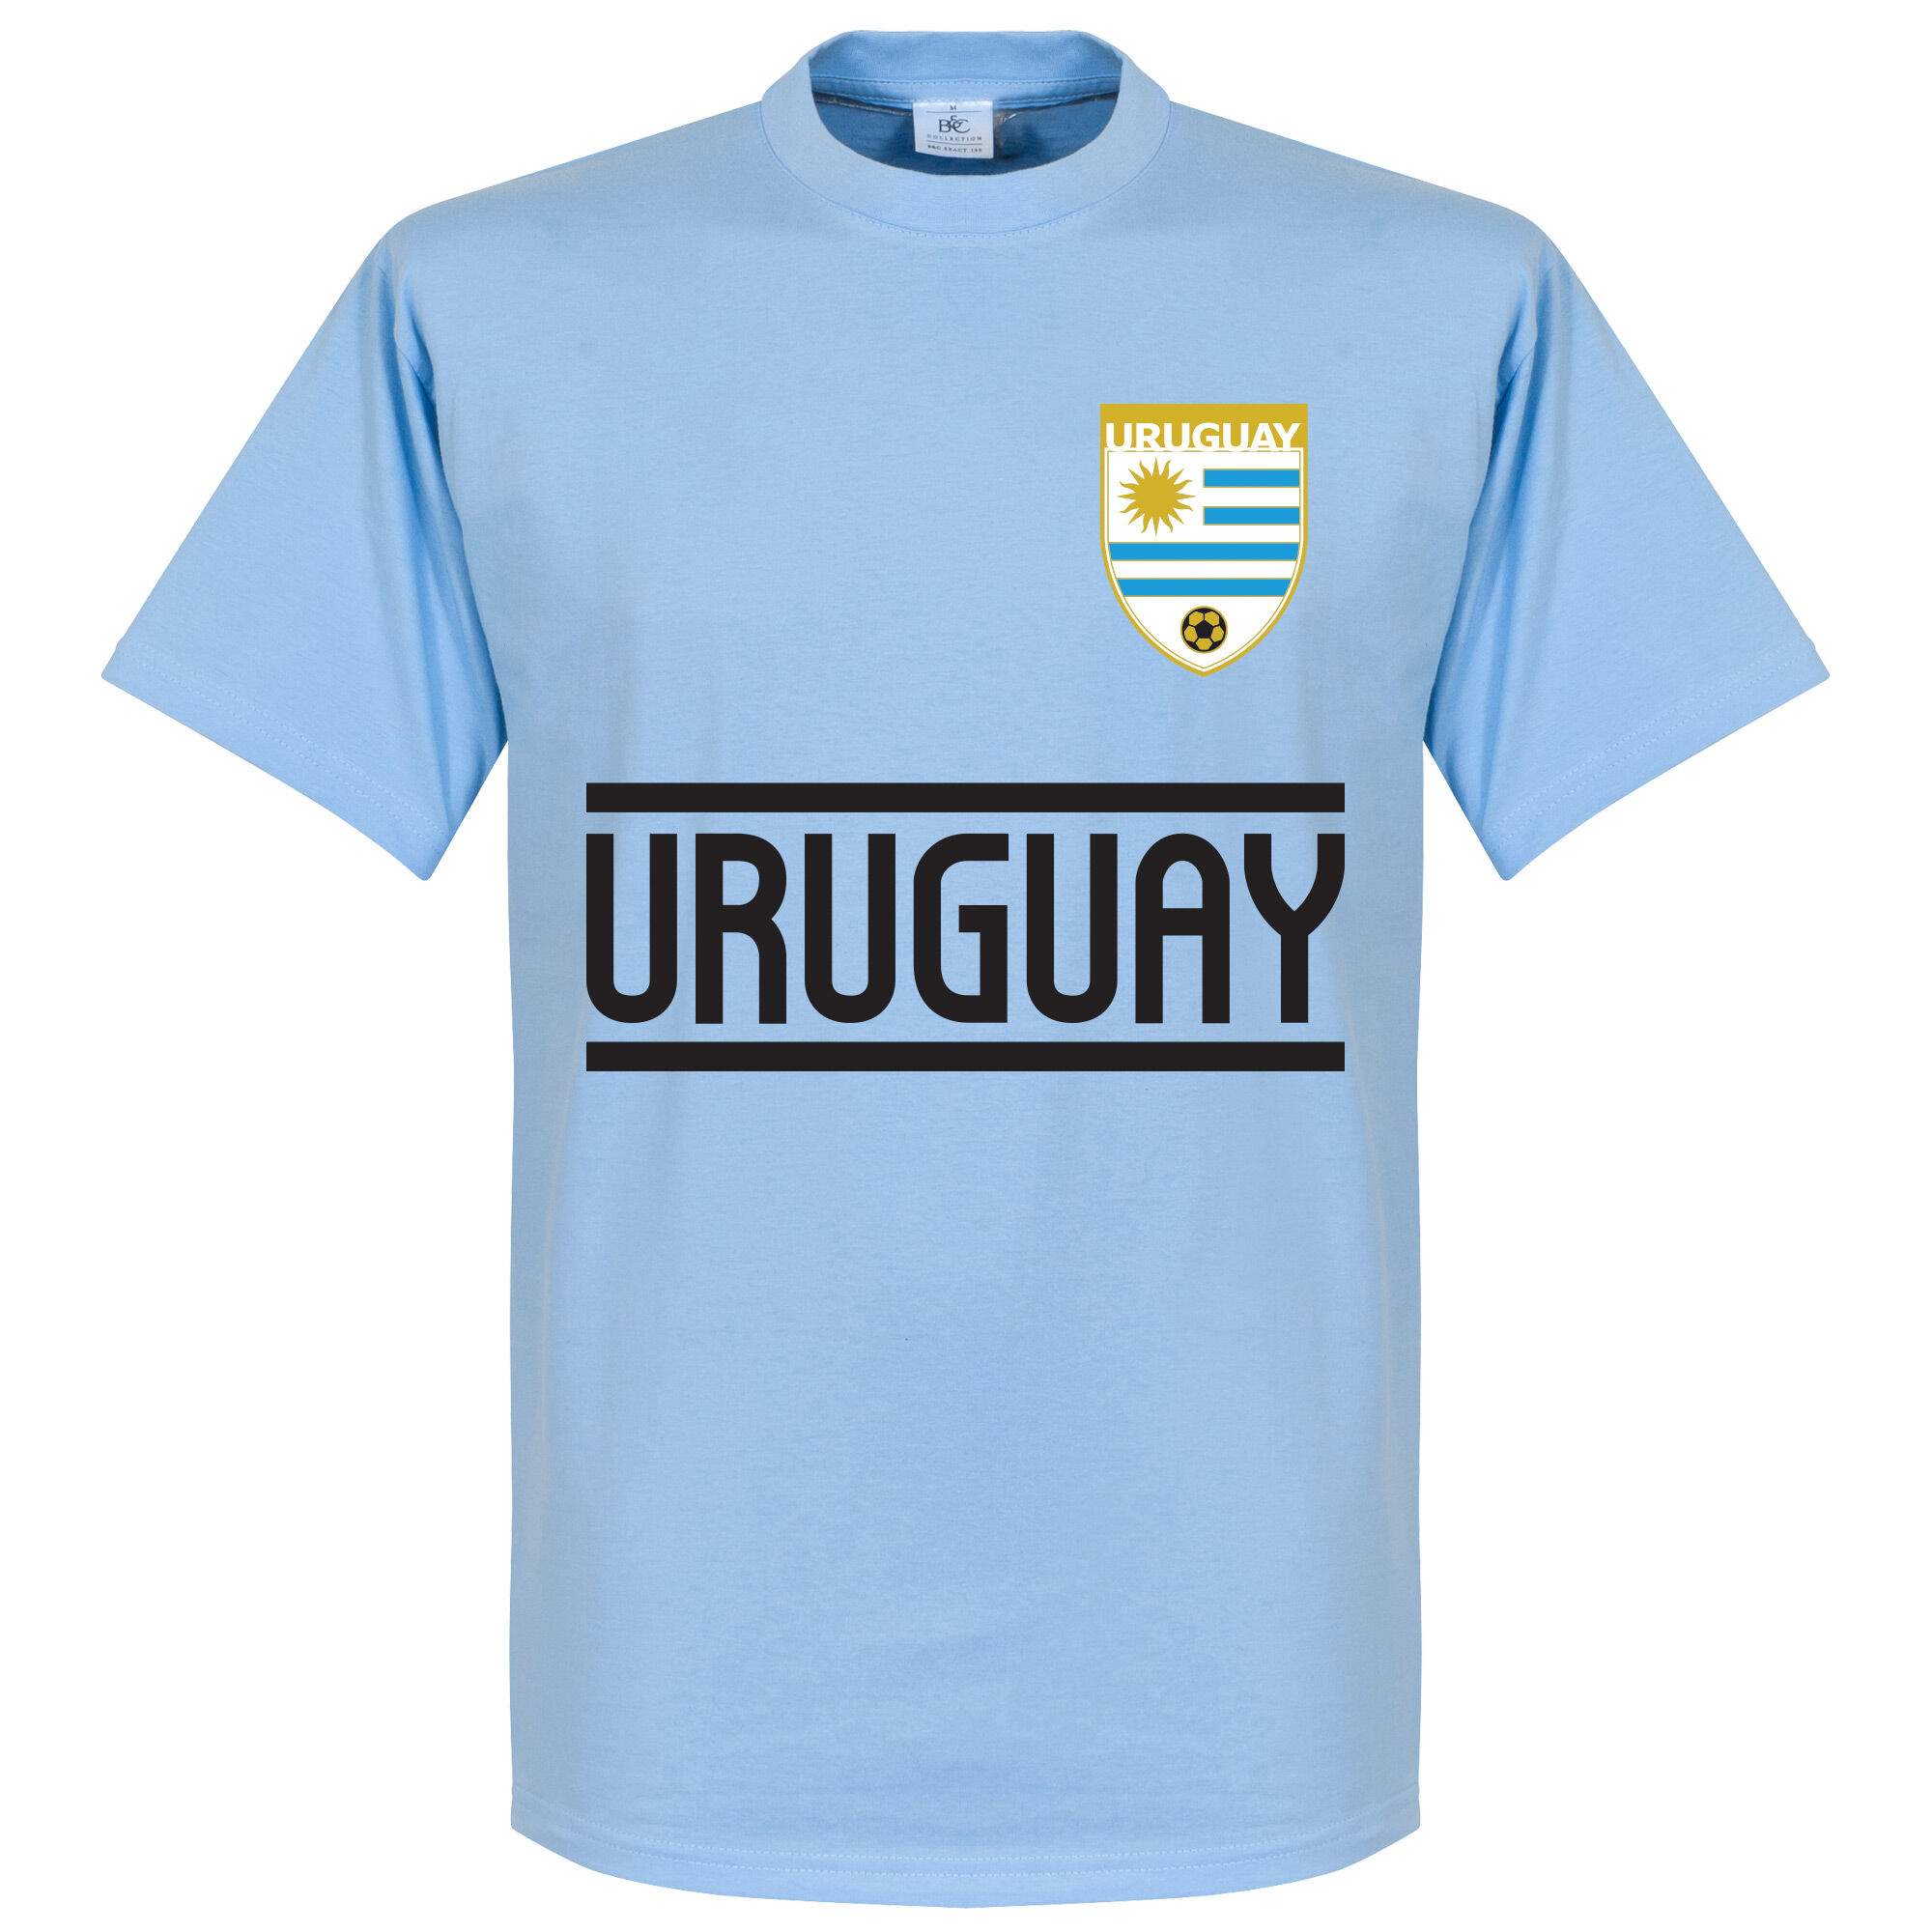 Uruguay - Tričko - modré